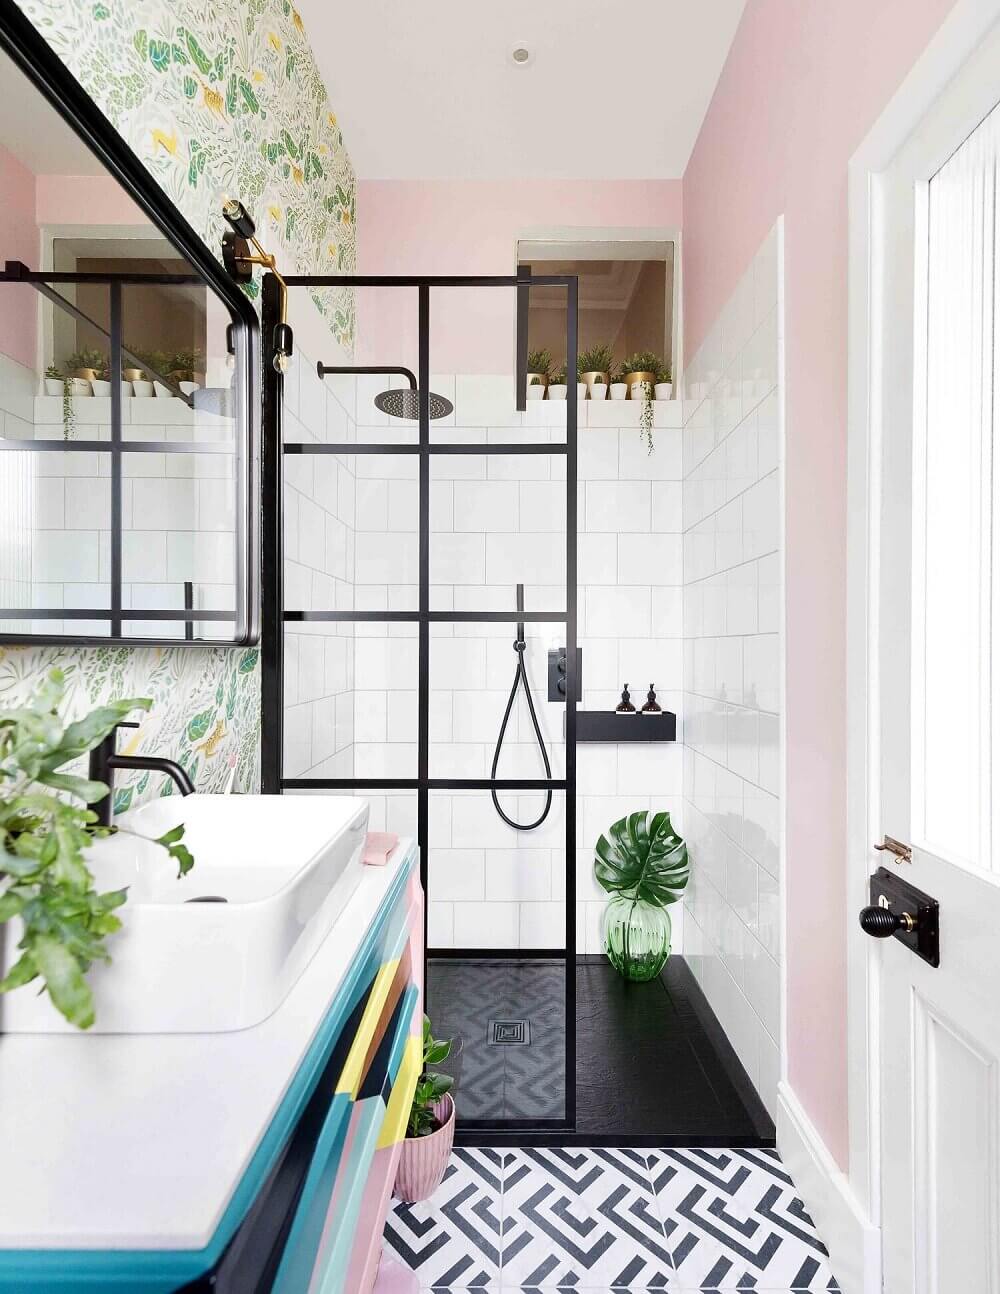 Small Bathroom Design Ideas Tips To, Design Ideas For Small Bathrooms